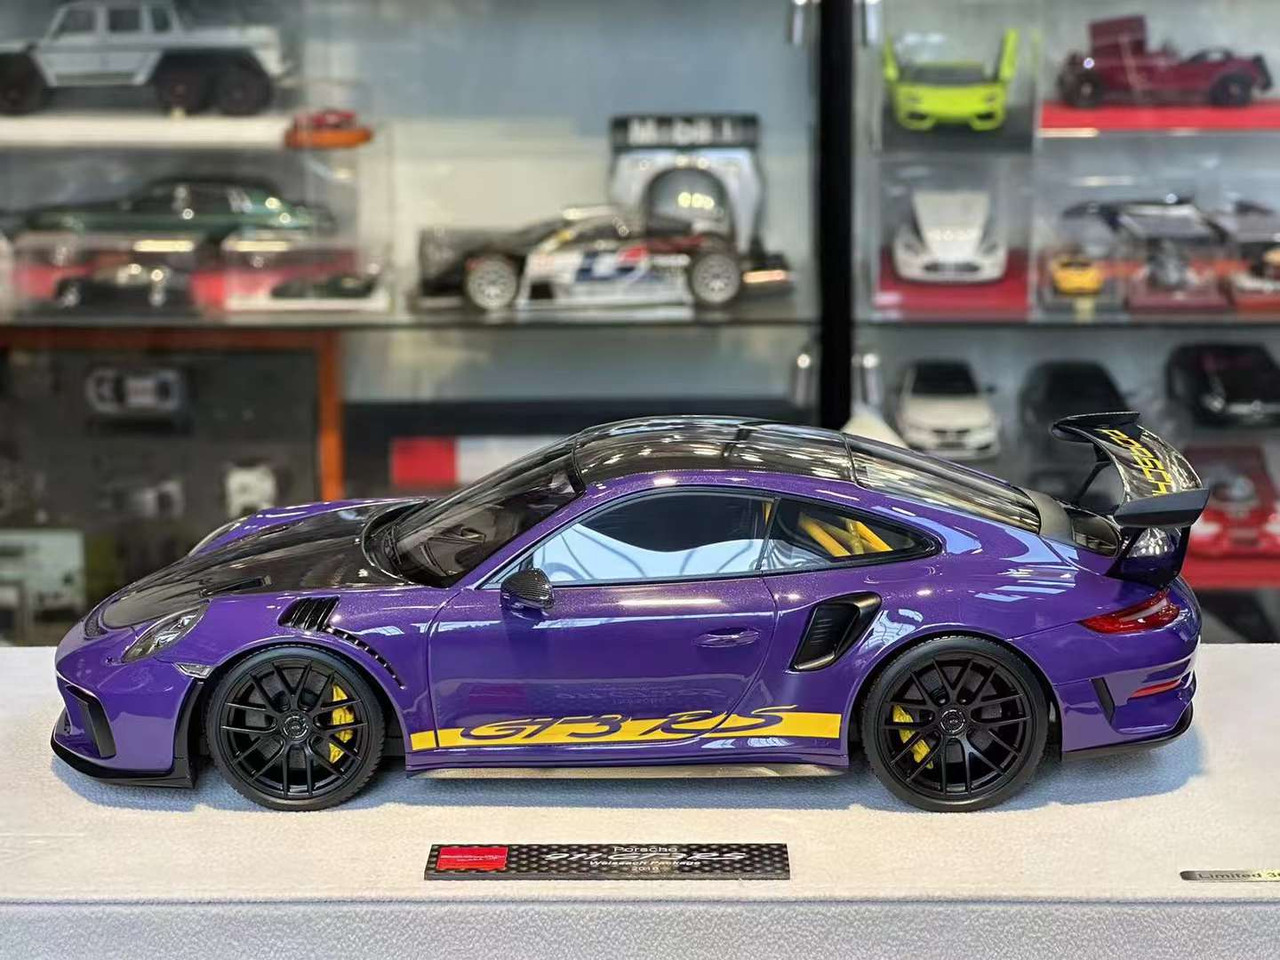 1/18 Makeup Porsche 911 991.2 GT3 RS (Purple with Carbon Hood) Resin Car Model